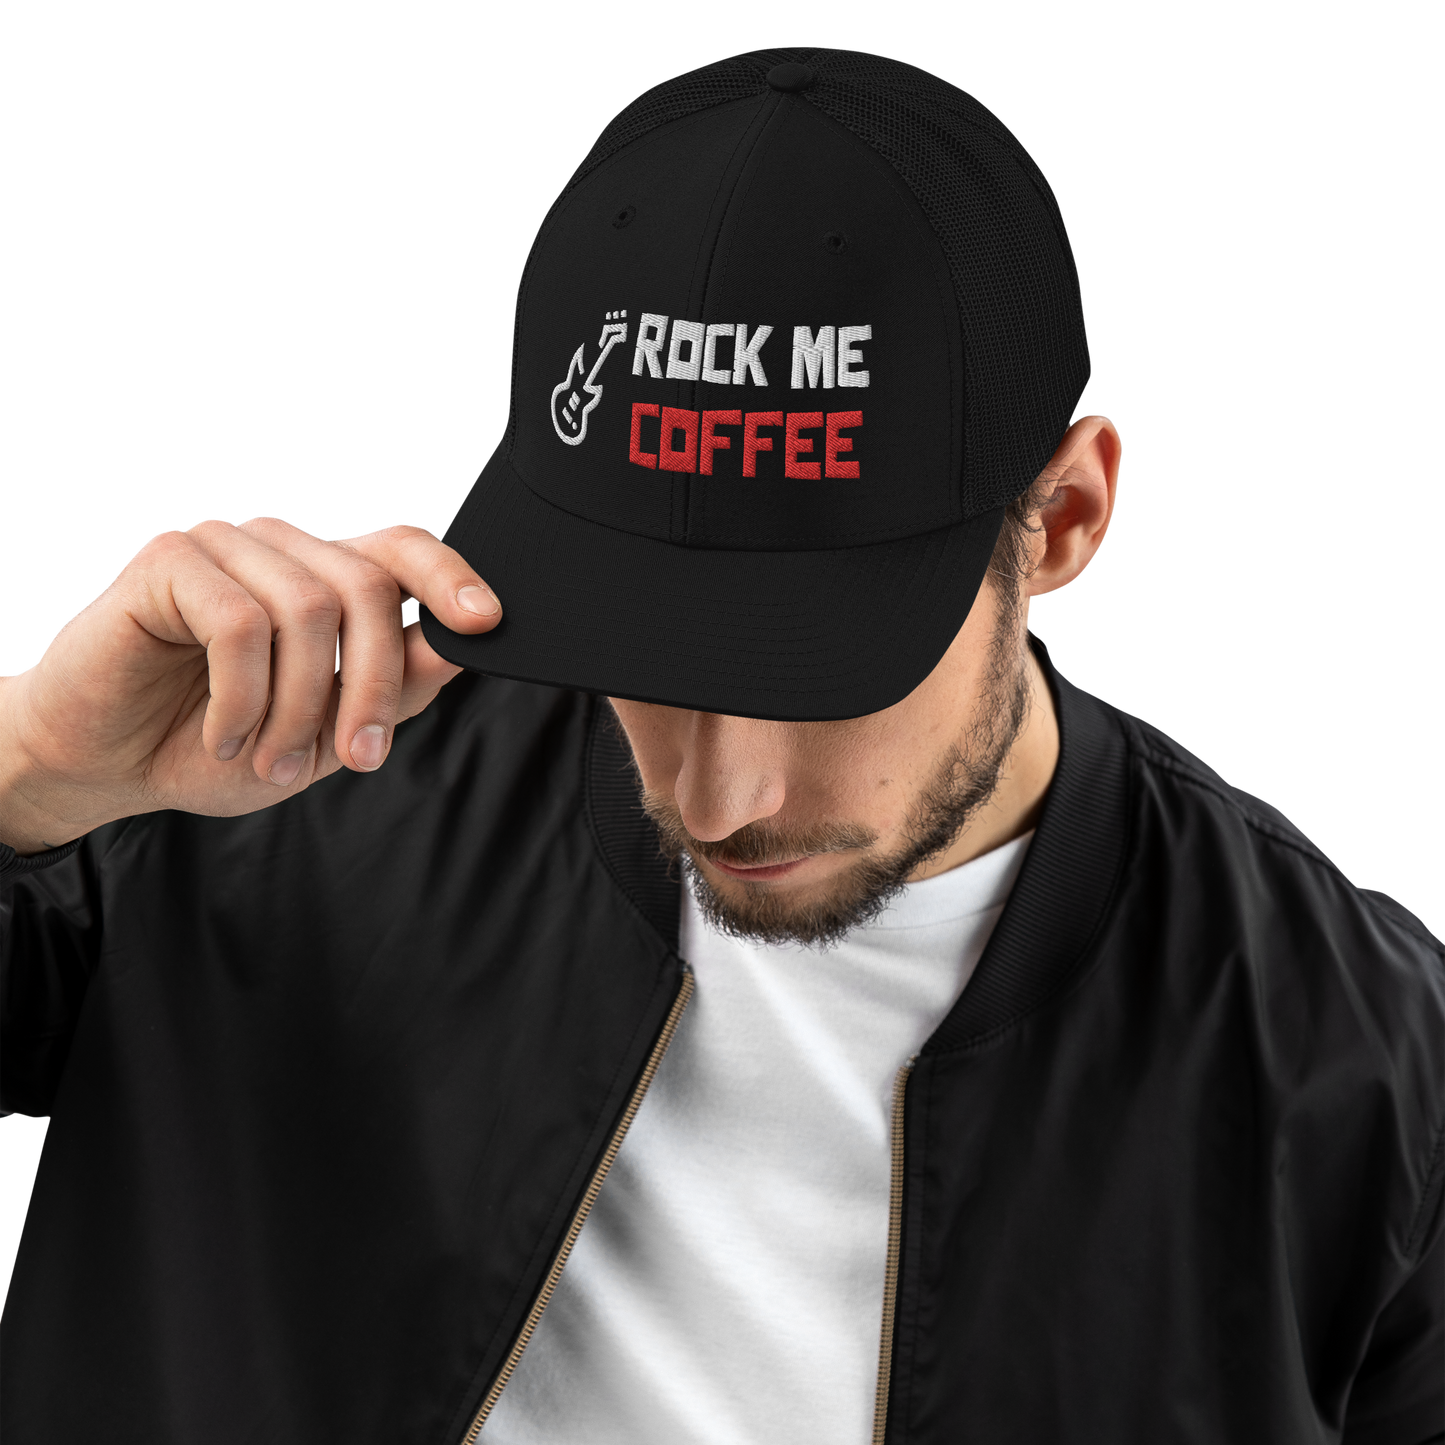 ROCK ME COFFEE/GUITAR - Trucker Cap